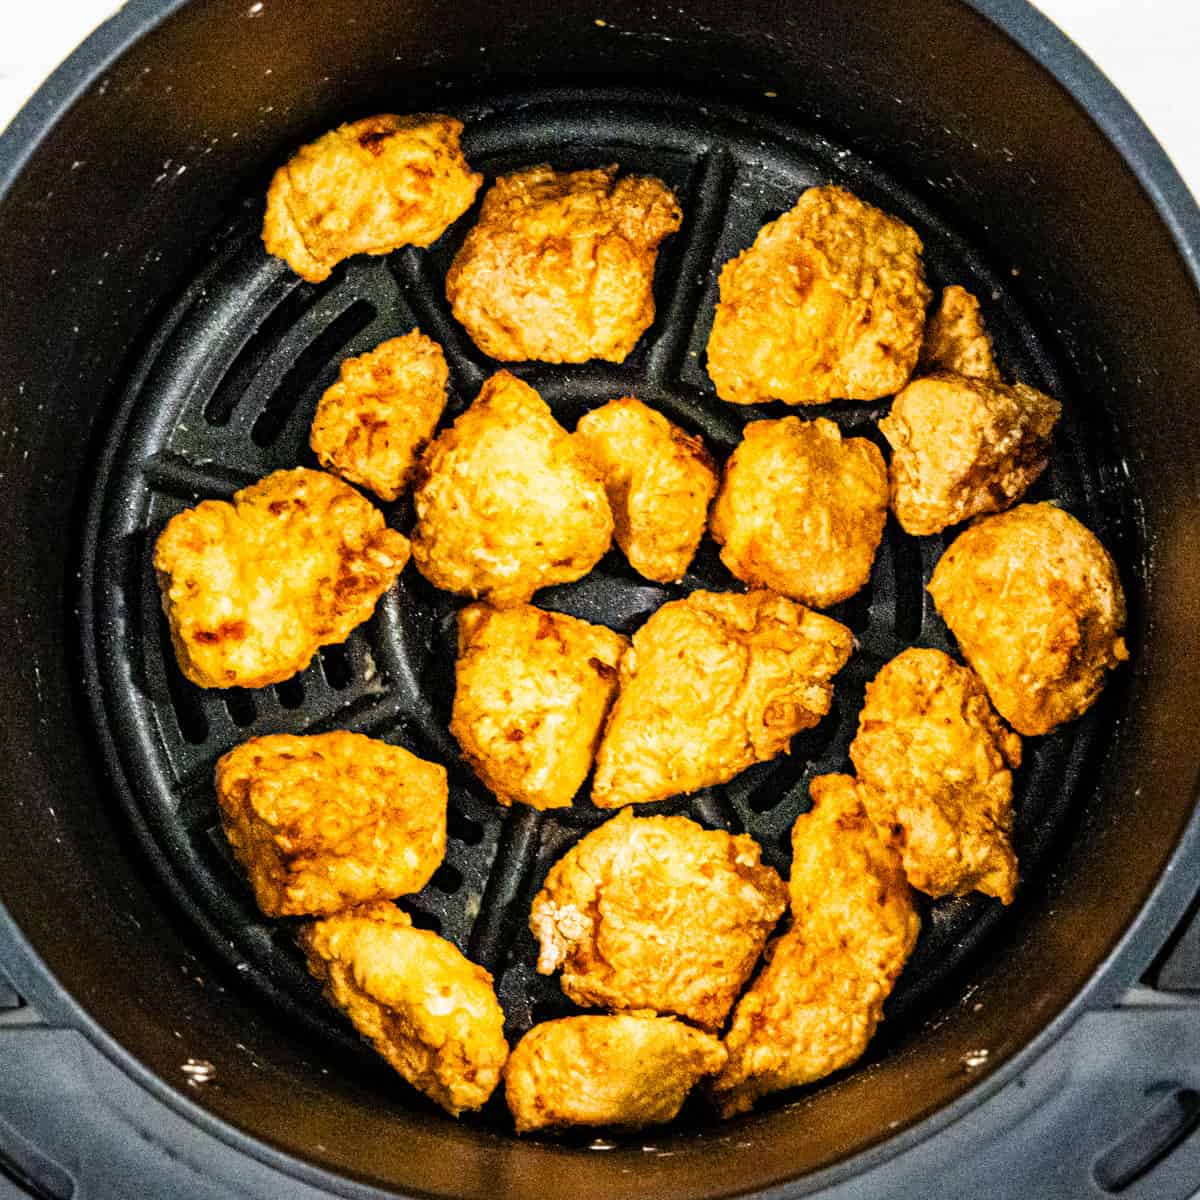 Cooked chicken bites in an air fryer basket.